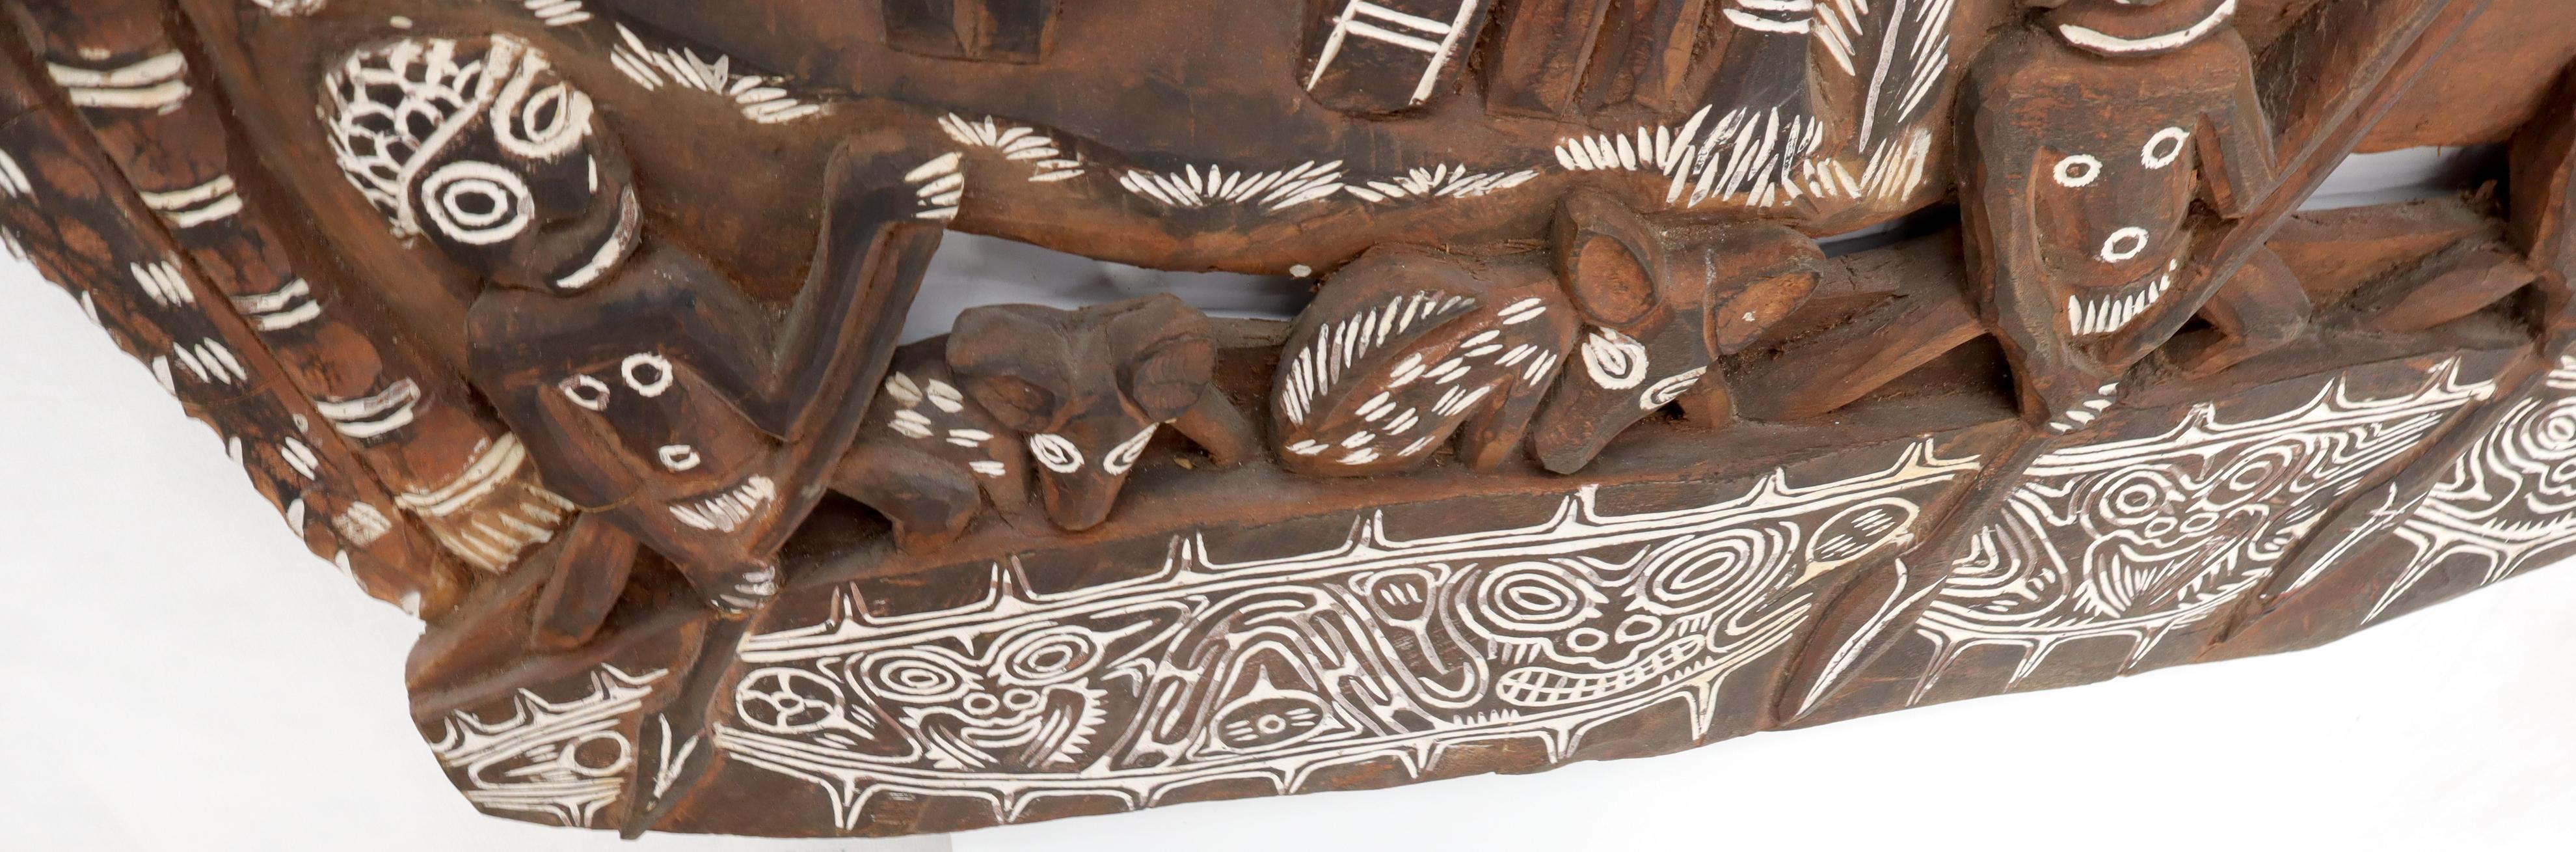 Large Carved Teak Decorative Tribal Wall Art Plaque Sculpture Native People For Sale 4